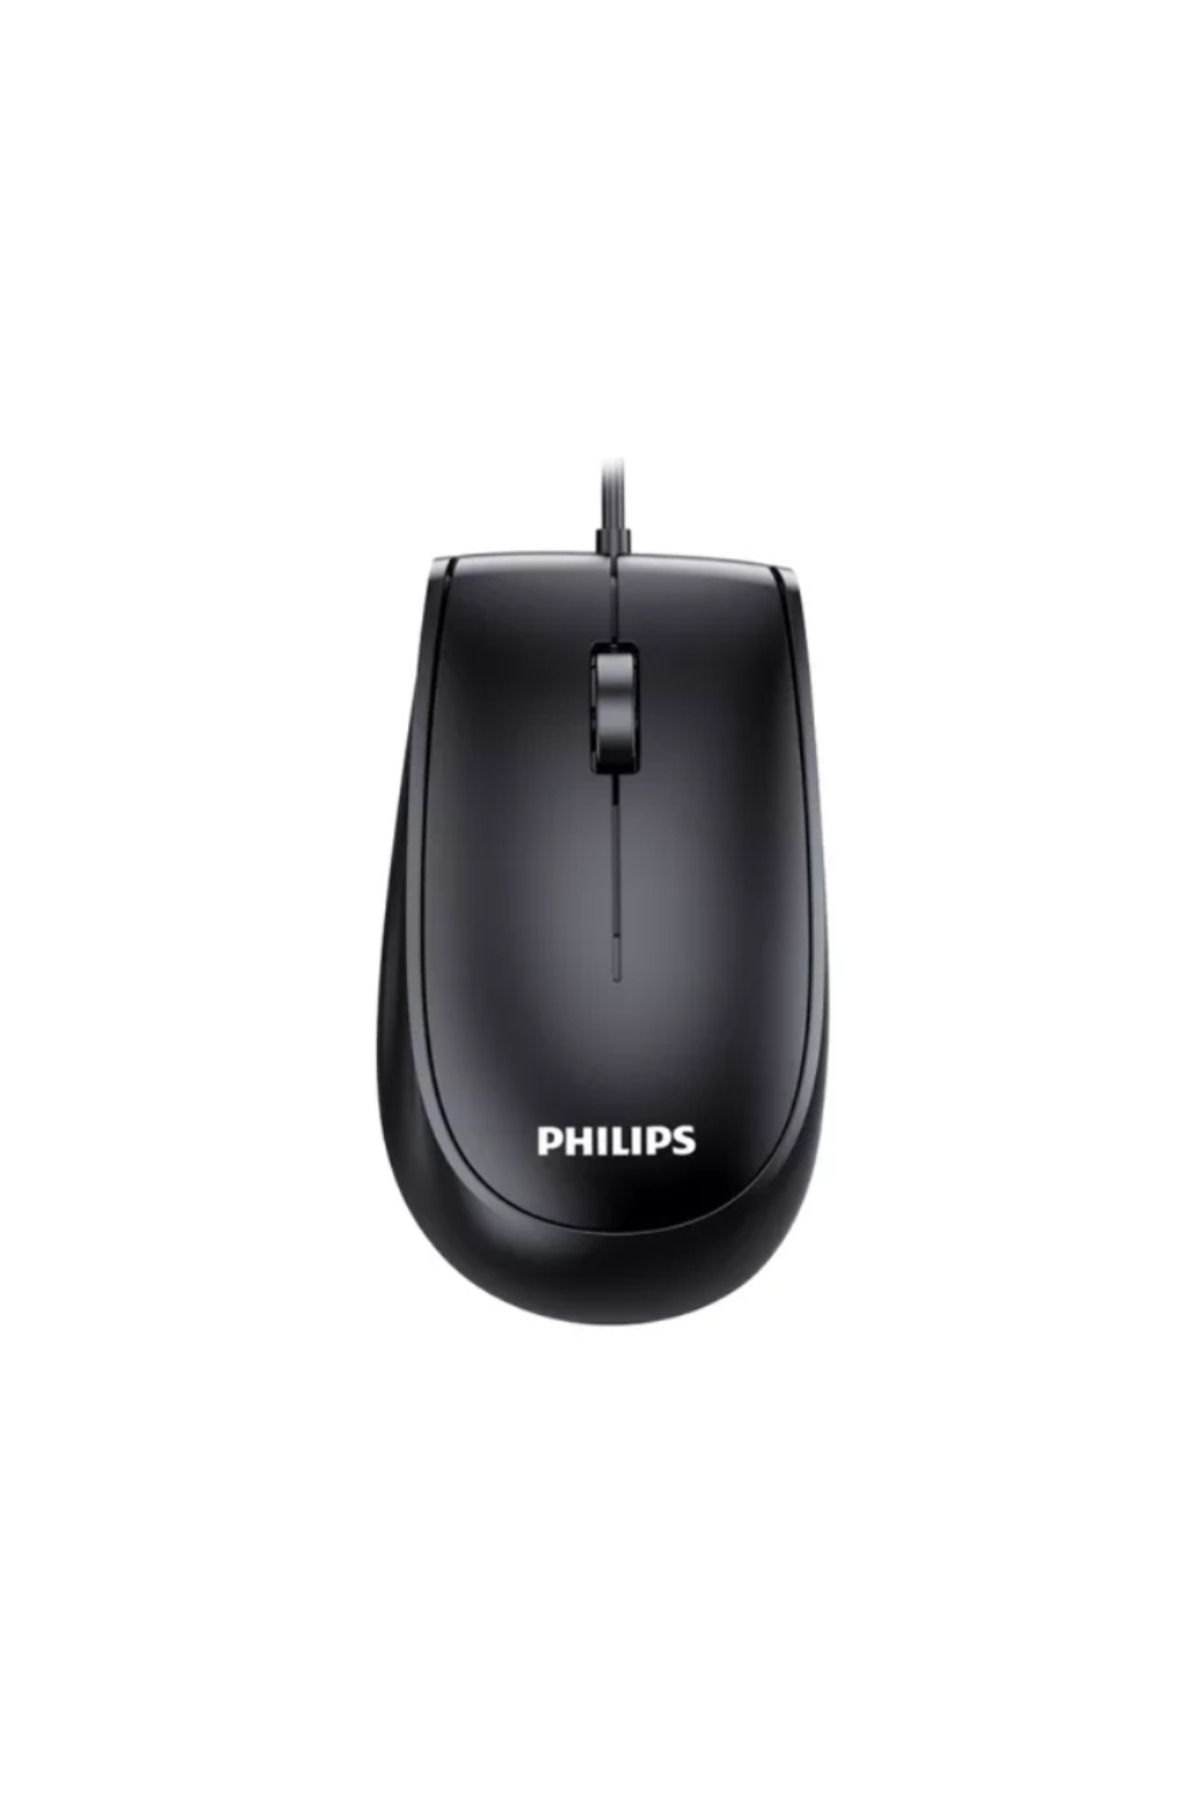 Philips M217 Spk7217 Ev Ofis 1200 Dpi Kablolu Mouse